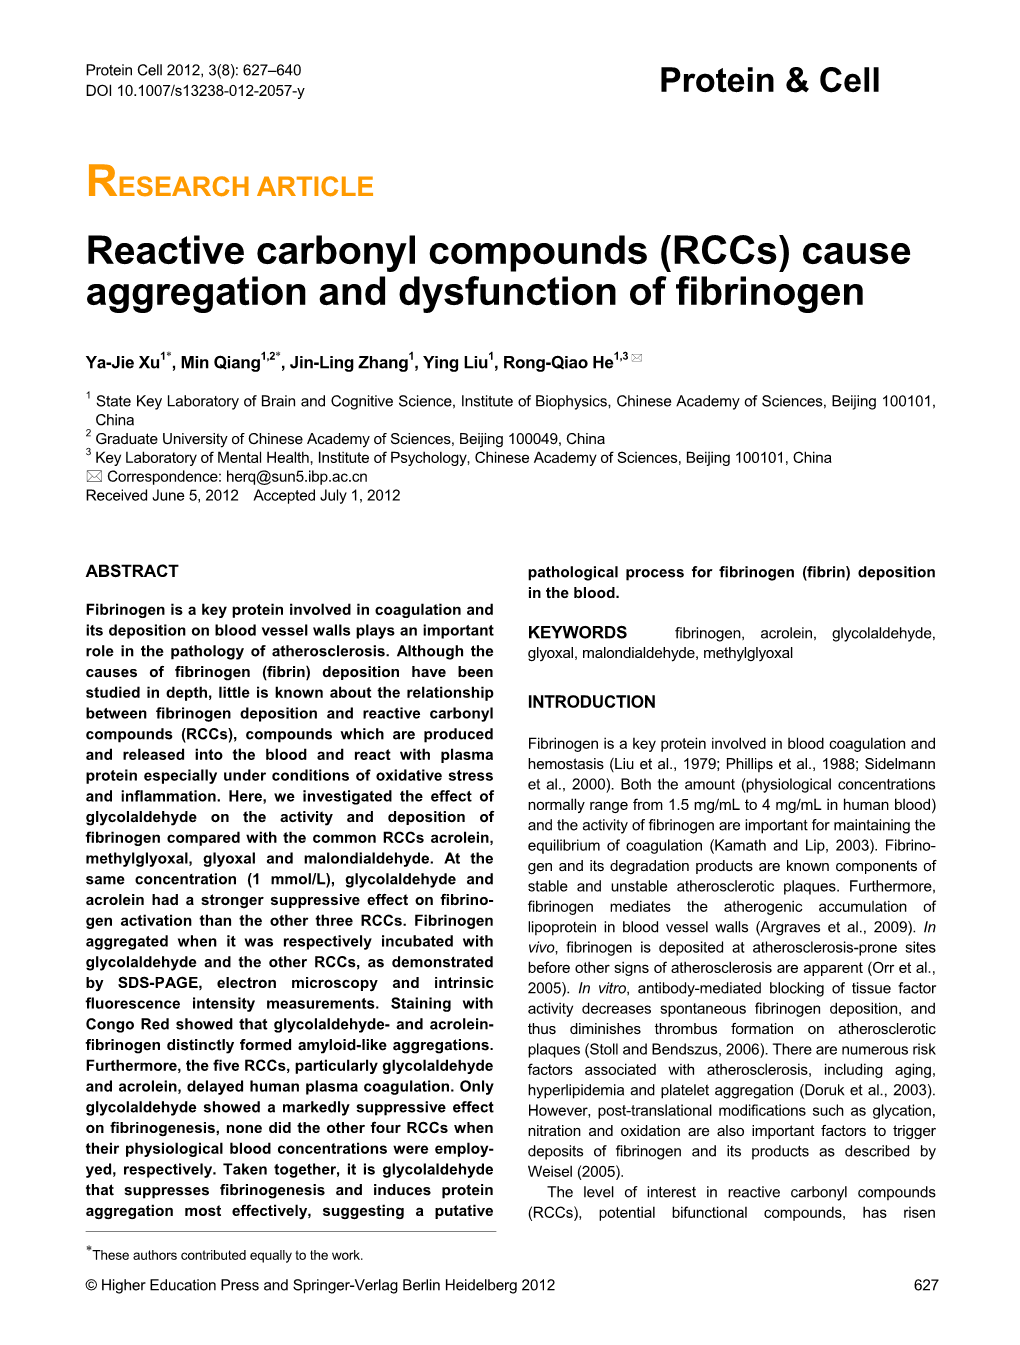 Reactive Carbonyl Compounds (Rccs) Cause Aggregation and Dysfunction of Fibrinogen